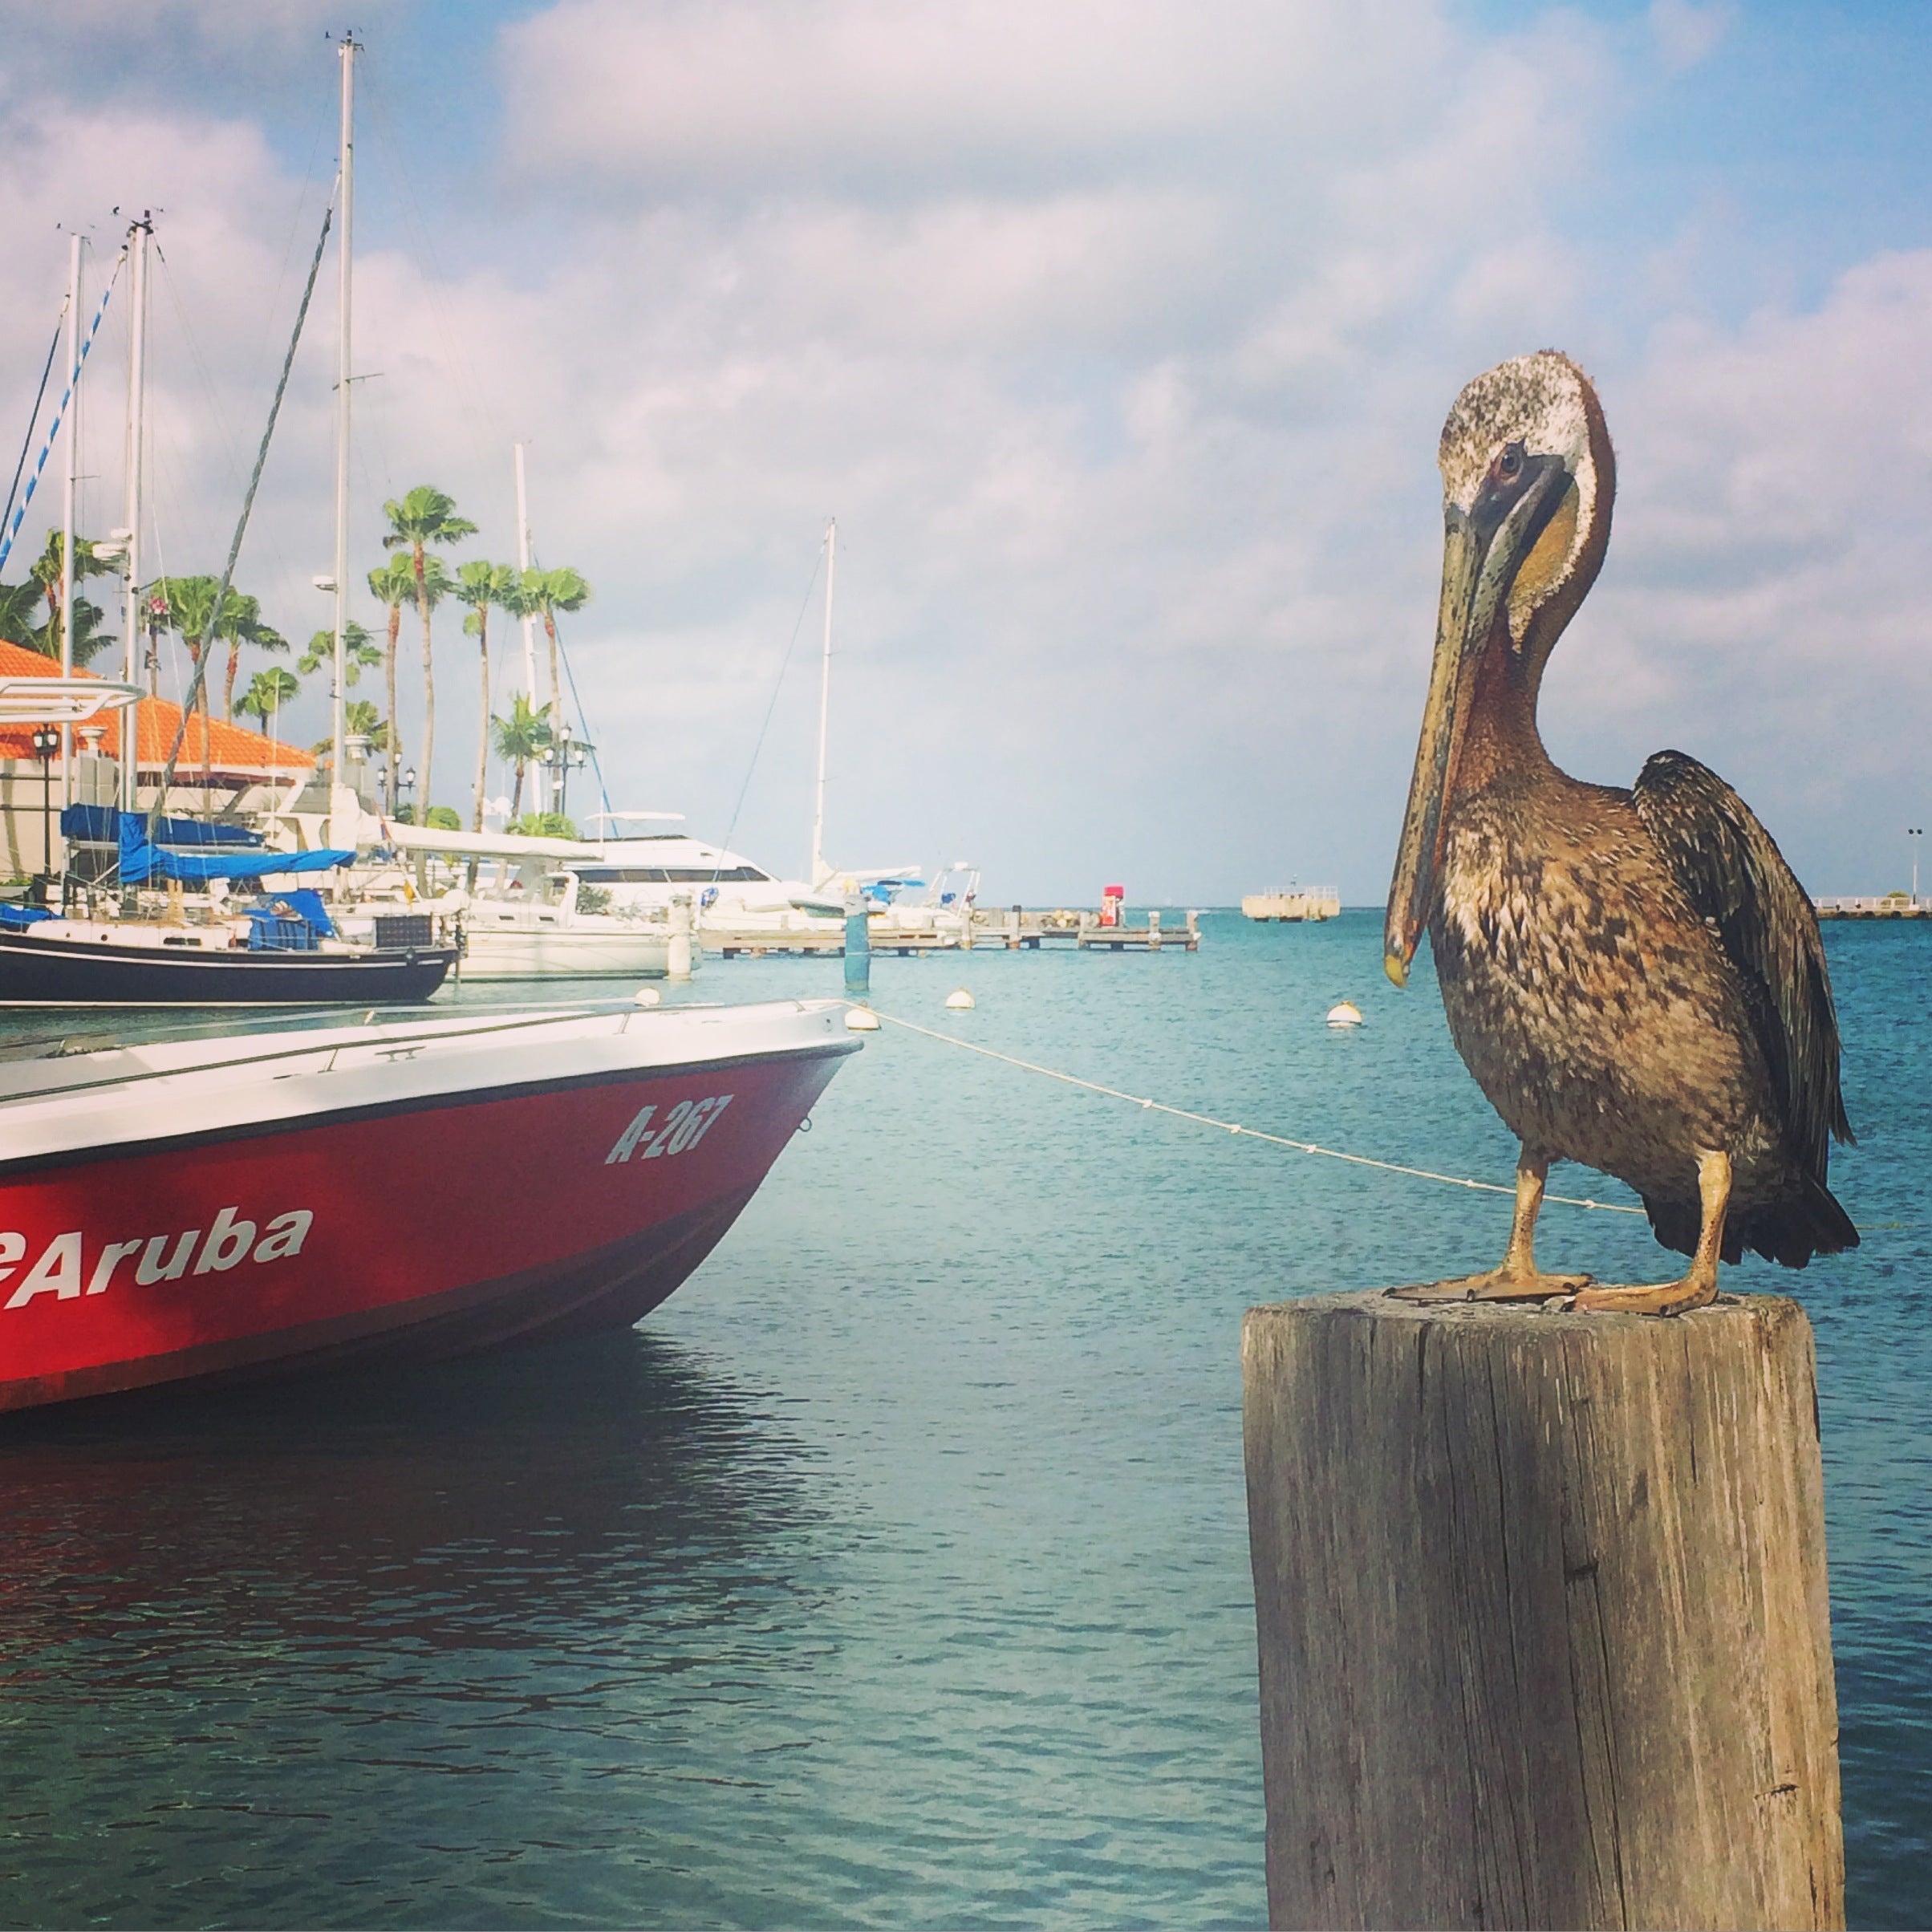 Pelican Aruba by Karma for a cure